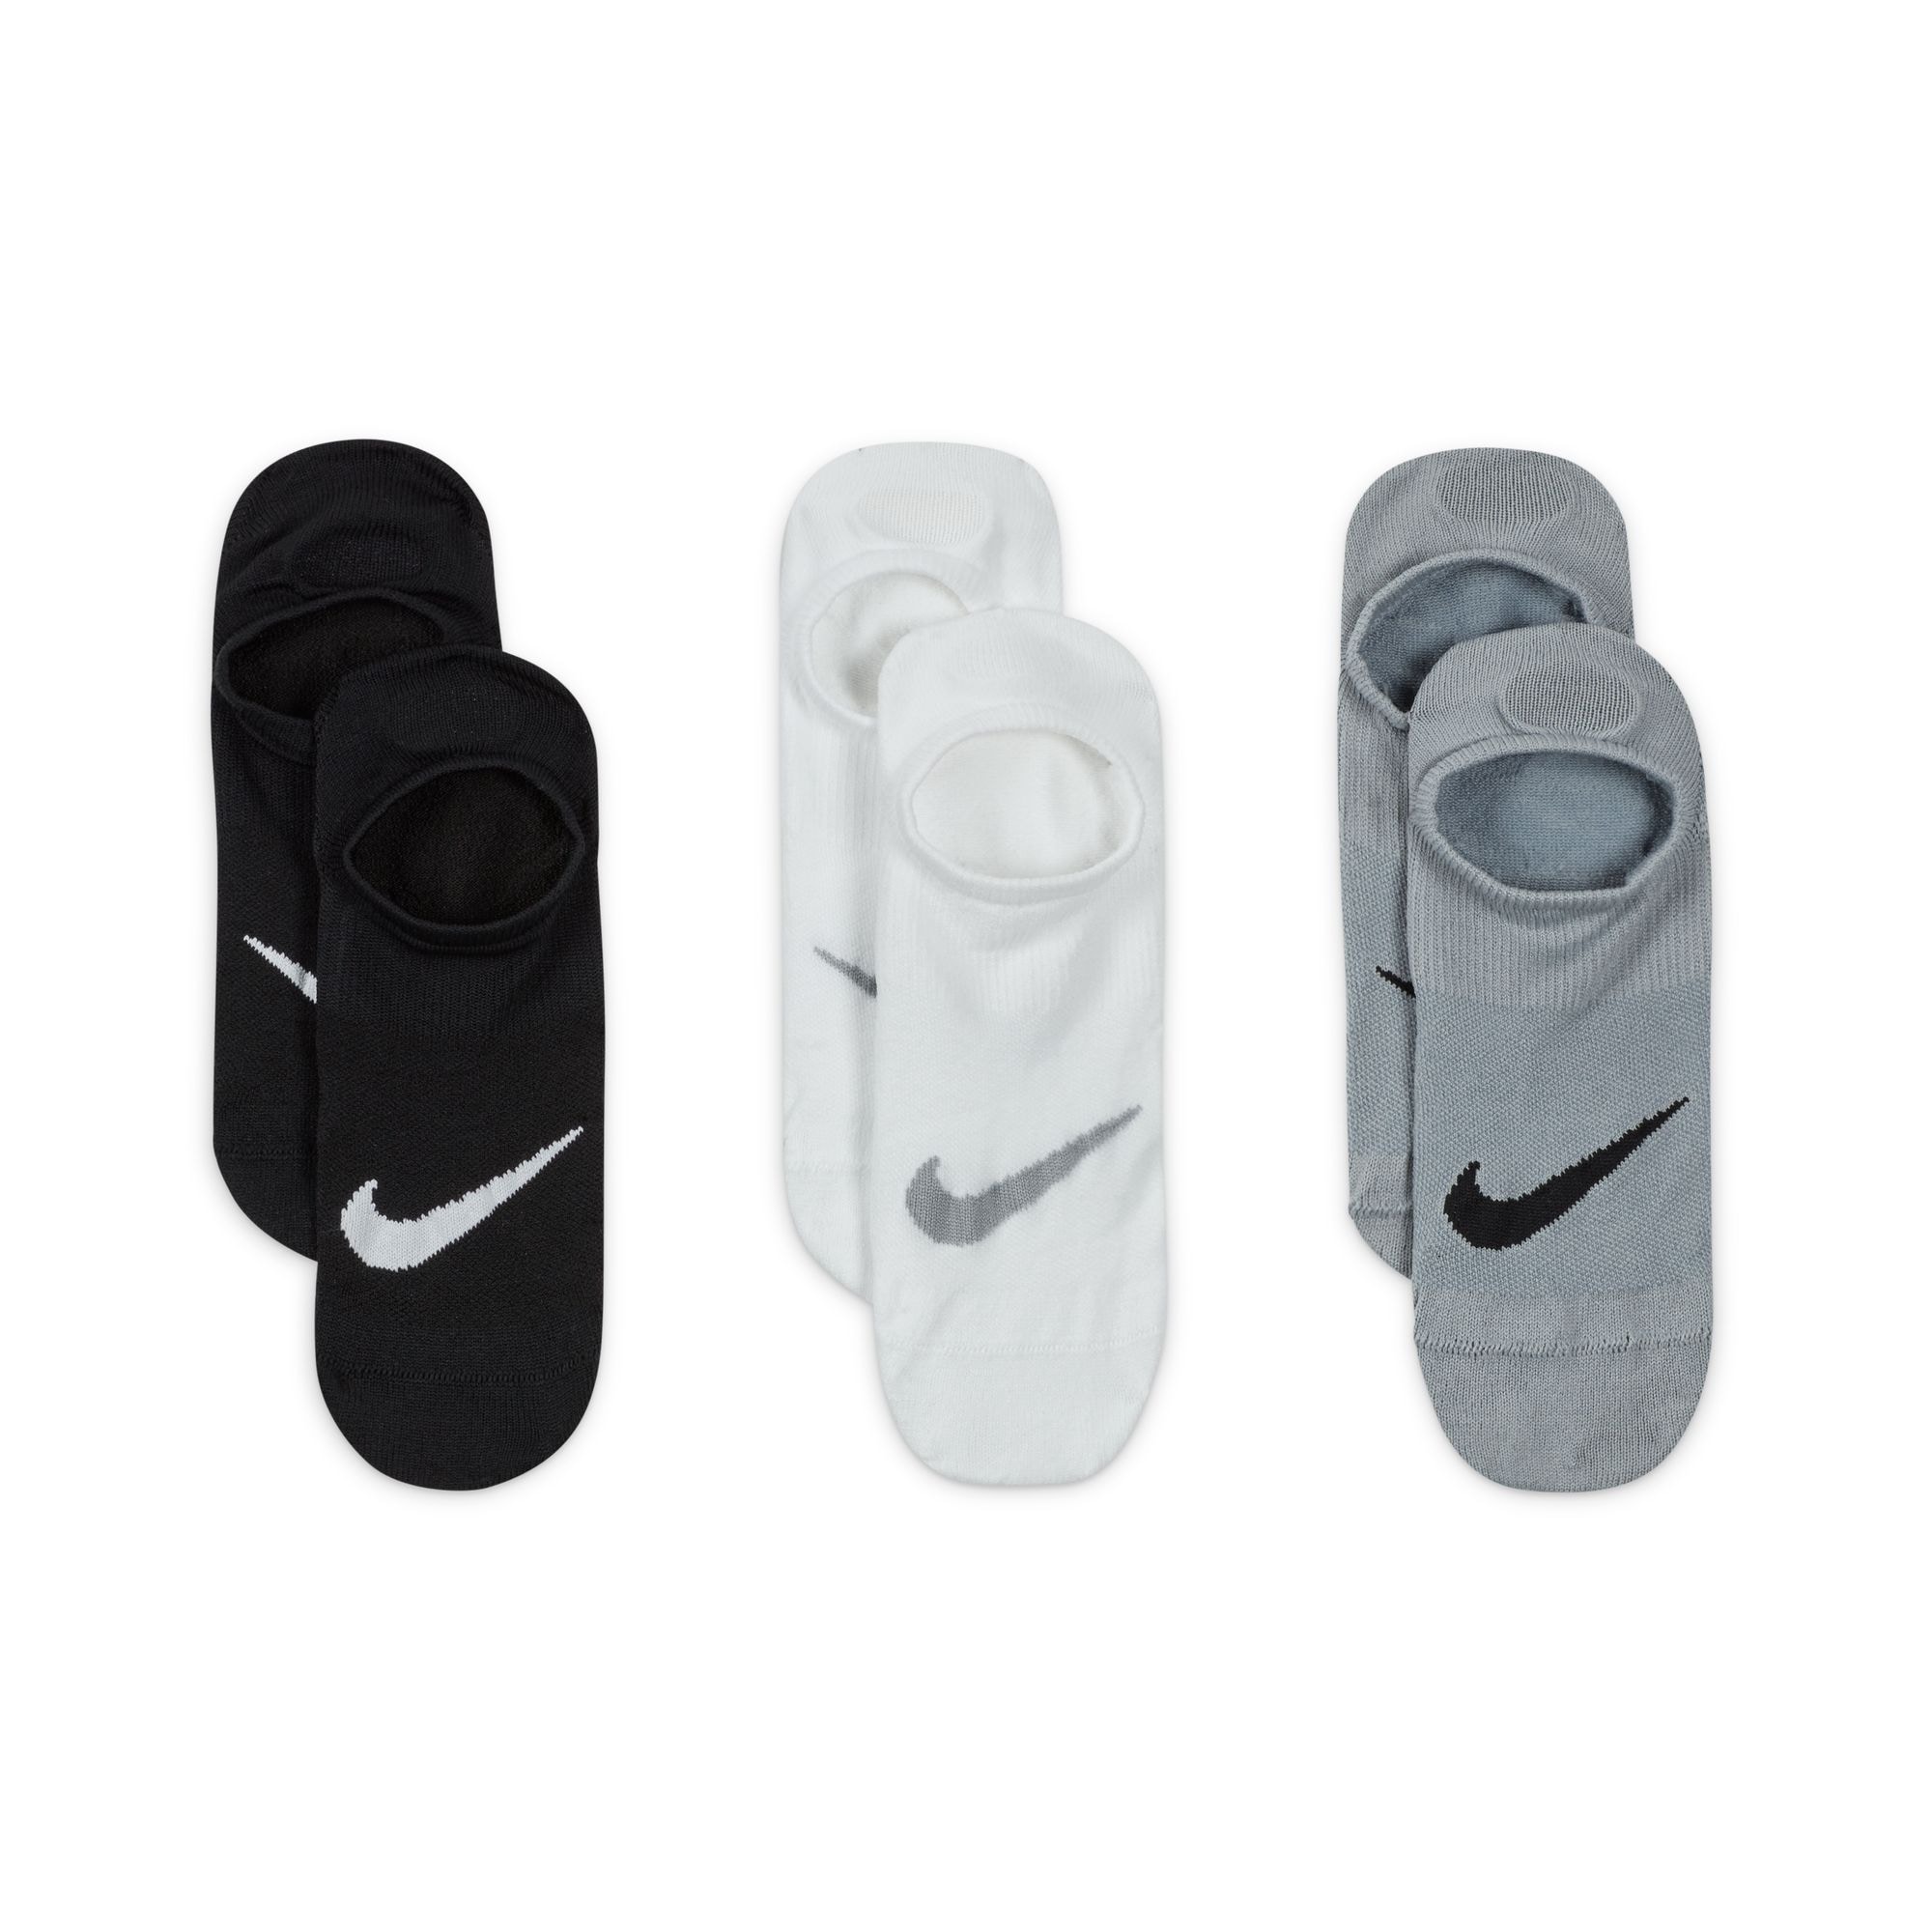 Nike Füßlinge, (3 Paar), mit atmungsaktivem Mesh